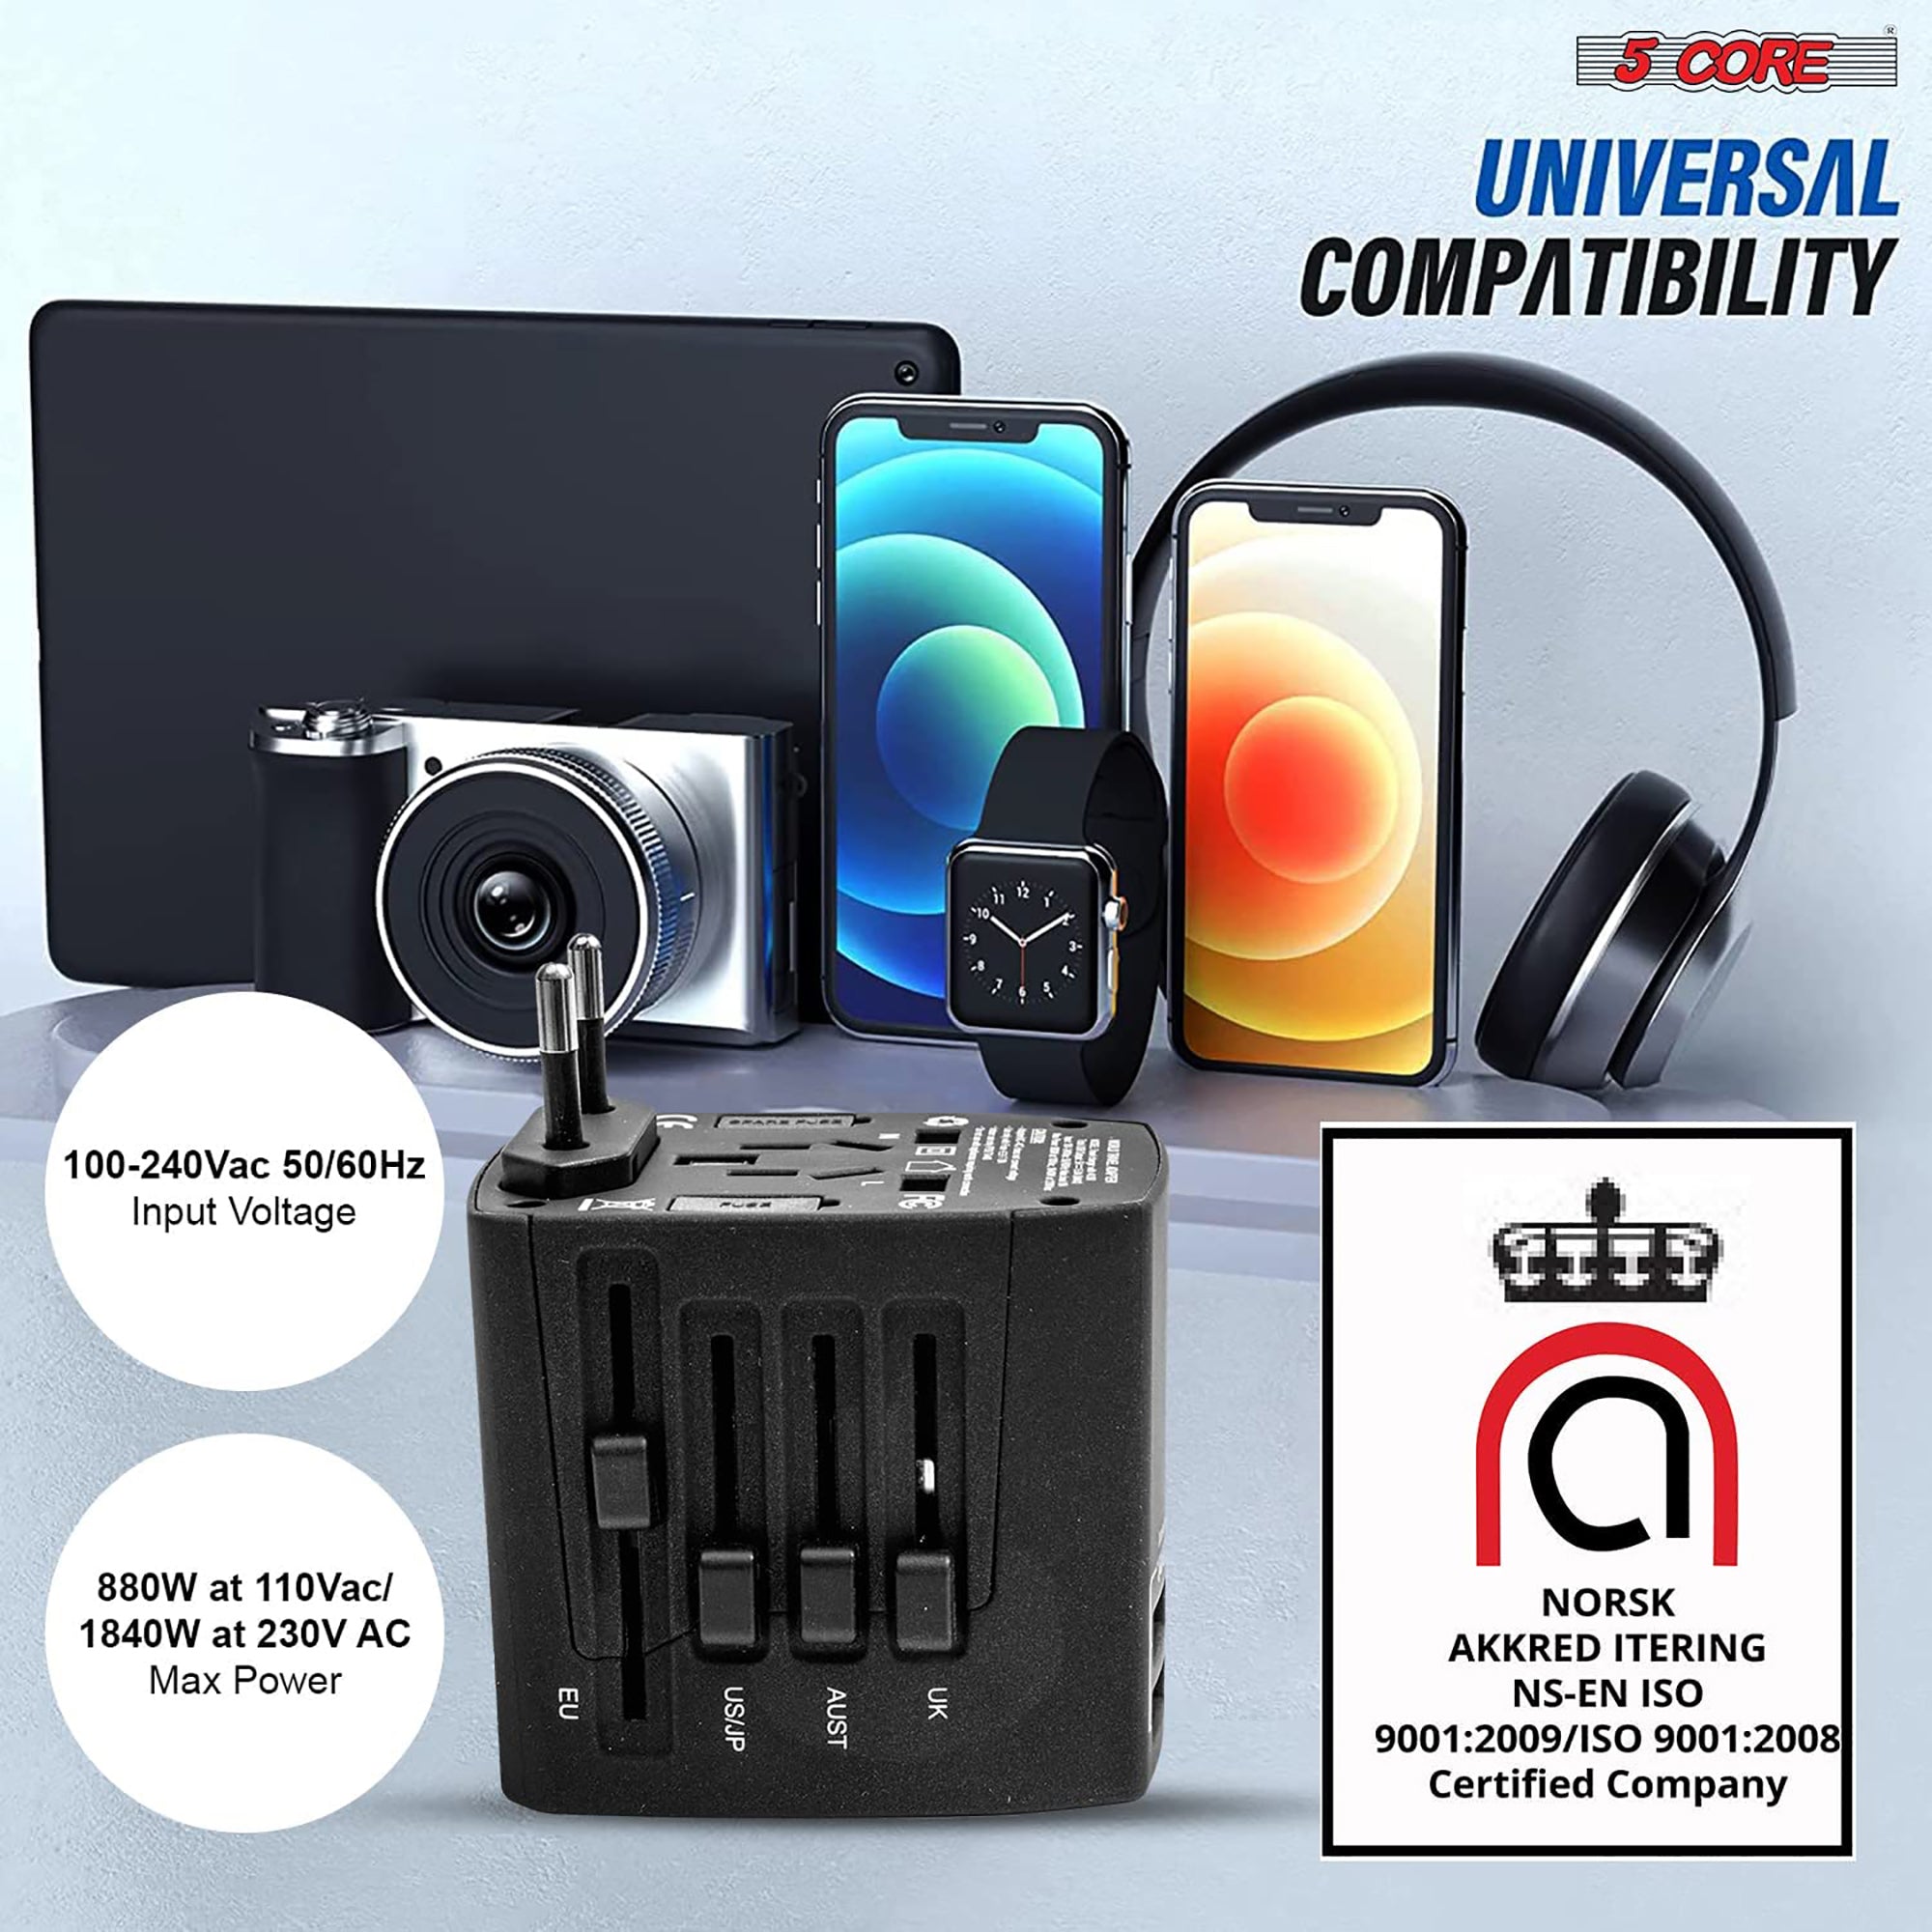 5 Core International Plug Adapter 3 Pack • Universal Travel Multicharger Power Adaptor w 4 USB Ports